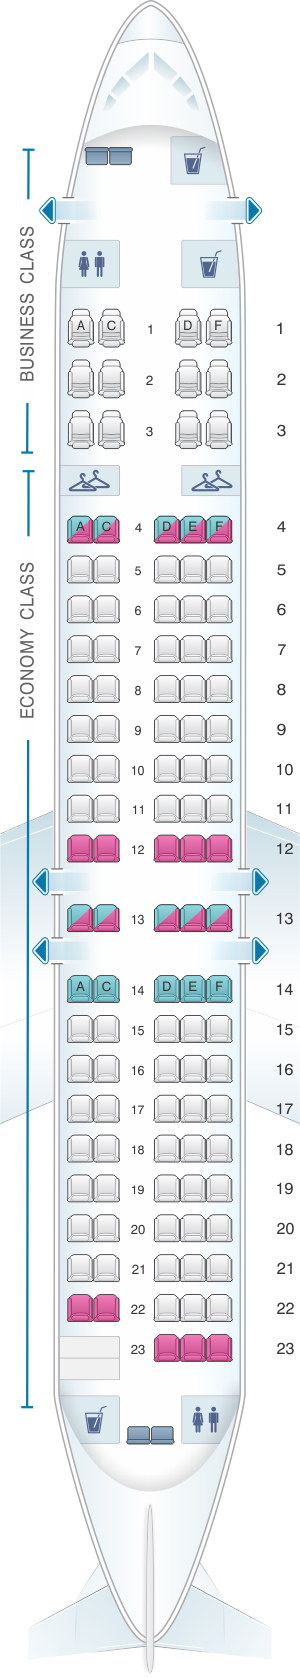 Seat map for Qantas Airways Boeing B717 200 110PAX